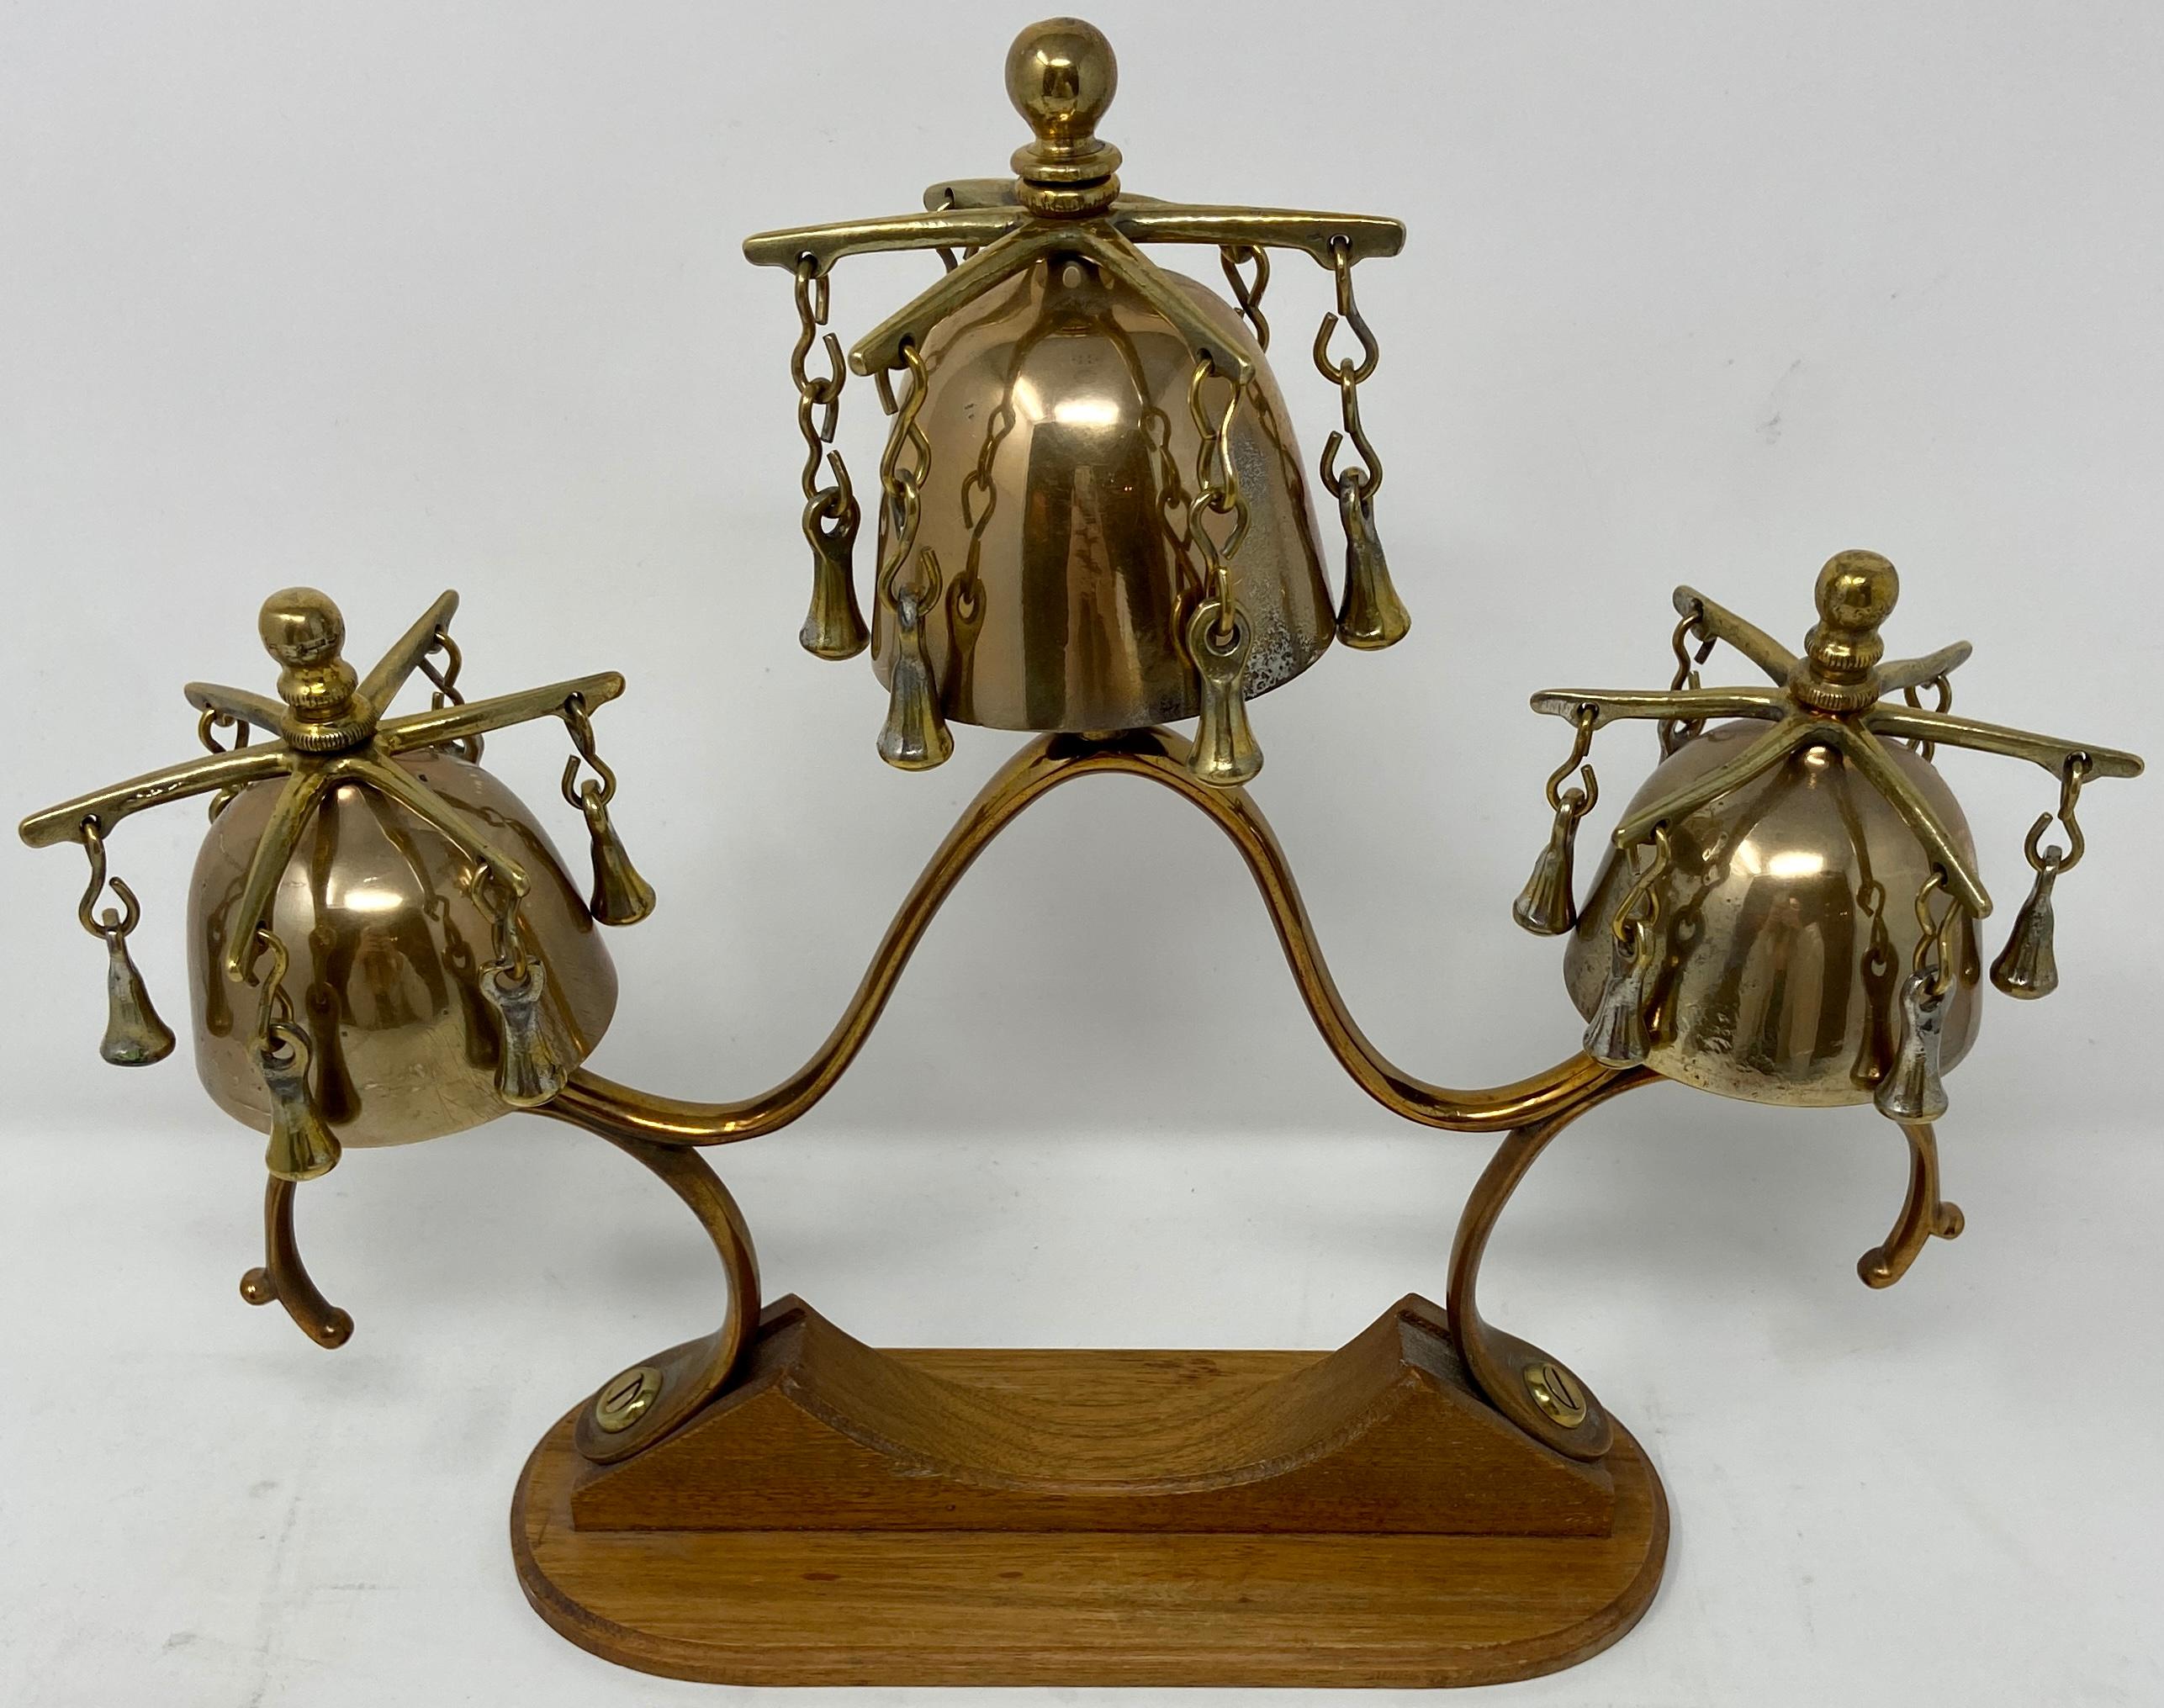 Antique brass horse hames design sleigh bells on stand, circa 1900.